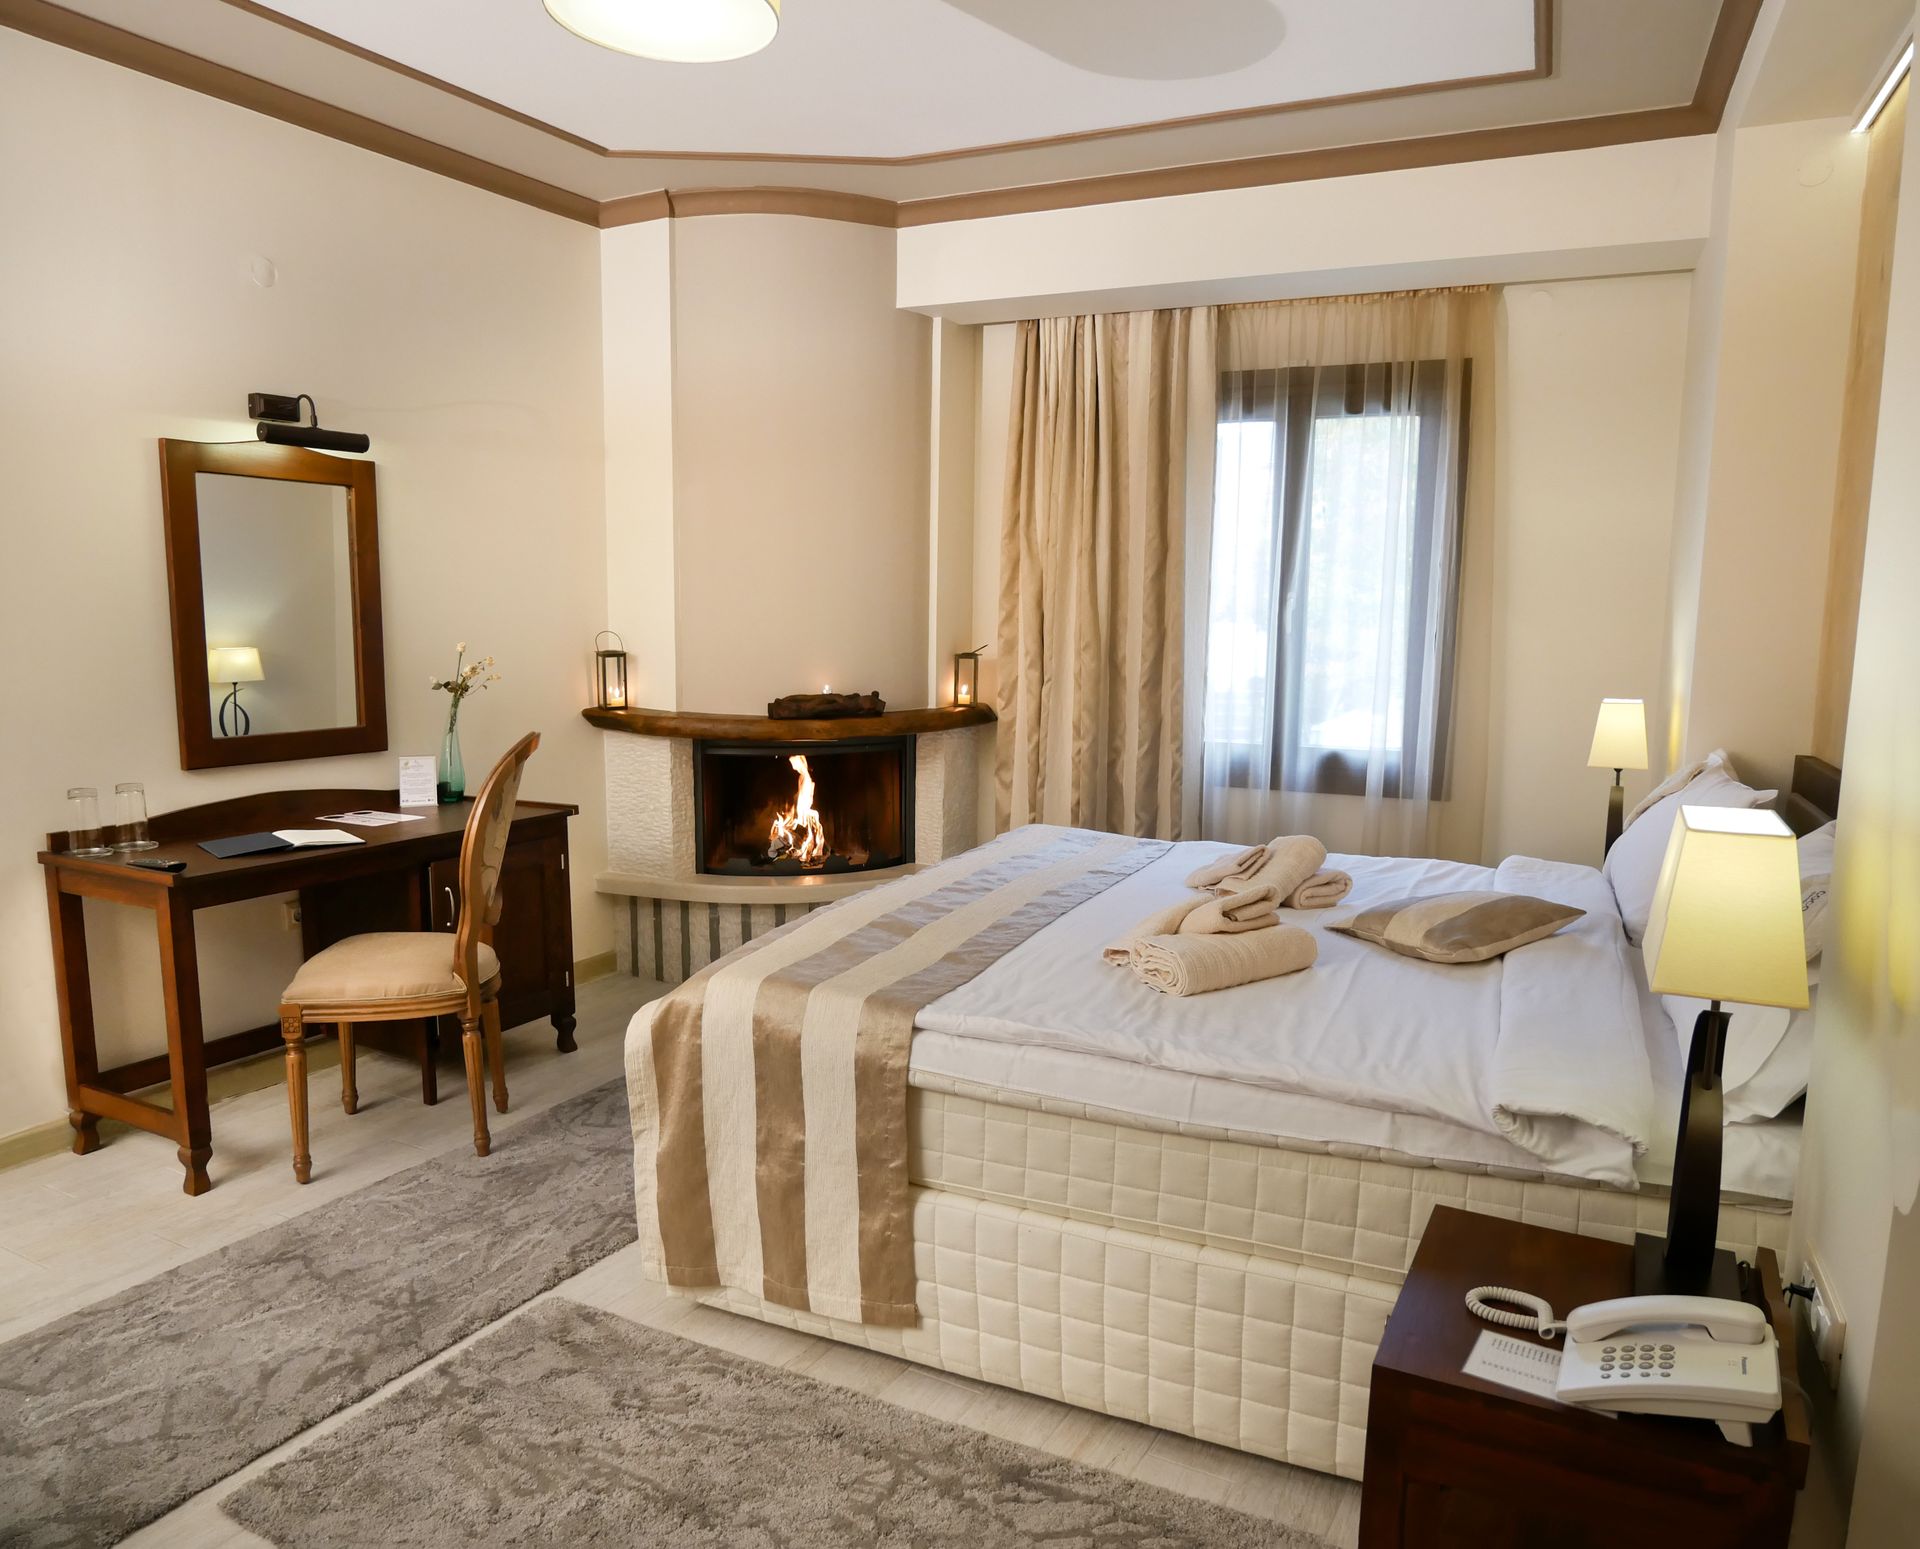 Rodovoli Hotel Konitsa - Κόνιτσα ✦ 6 Ημέρες (5 Διανυκτερεύσεις)